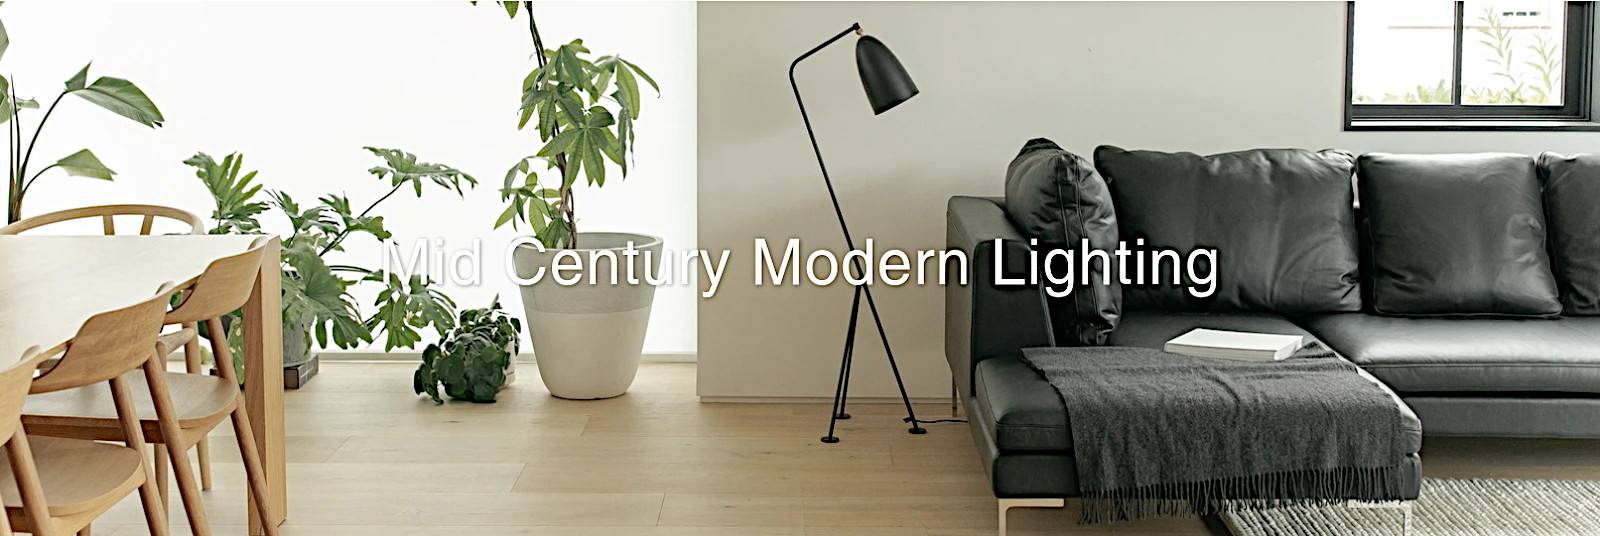 mid century modern lighting deals